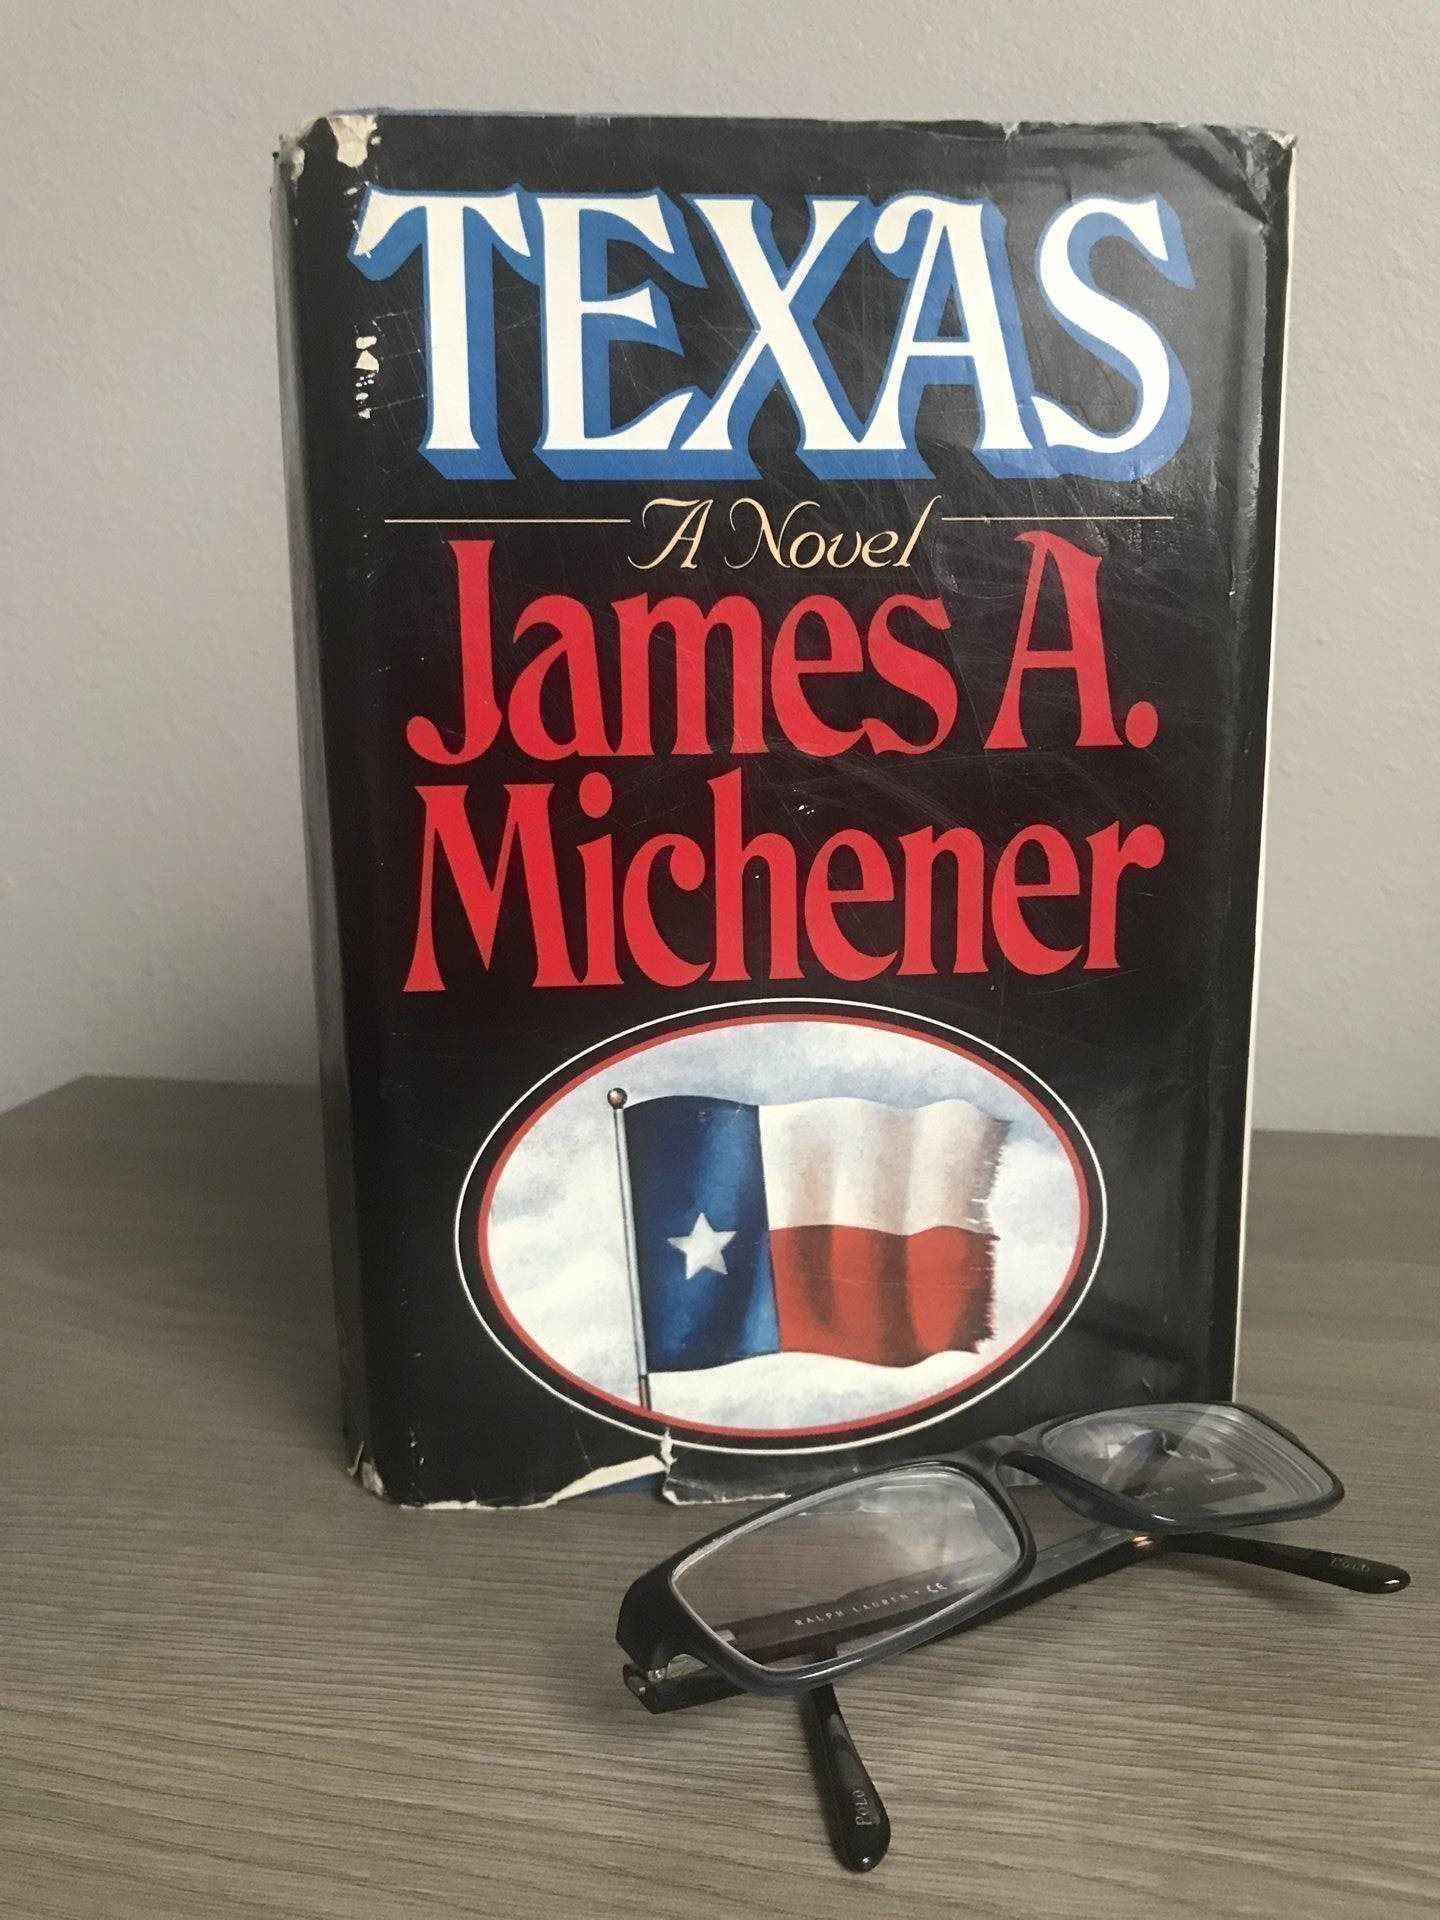 Texas - The Book teaser image